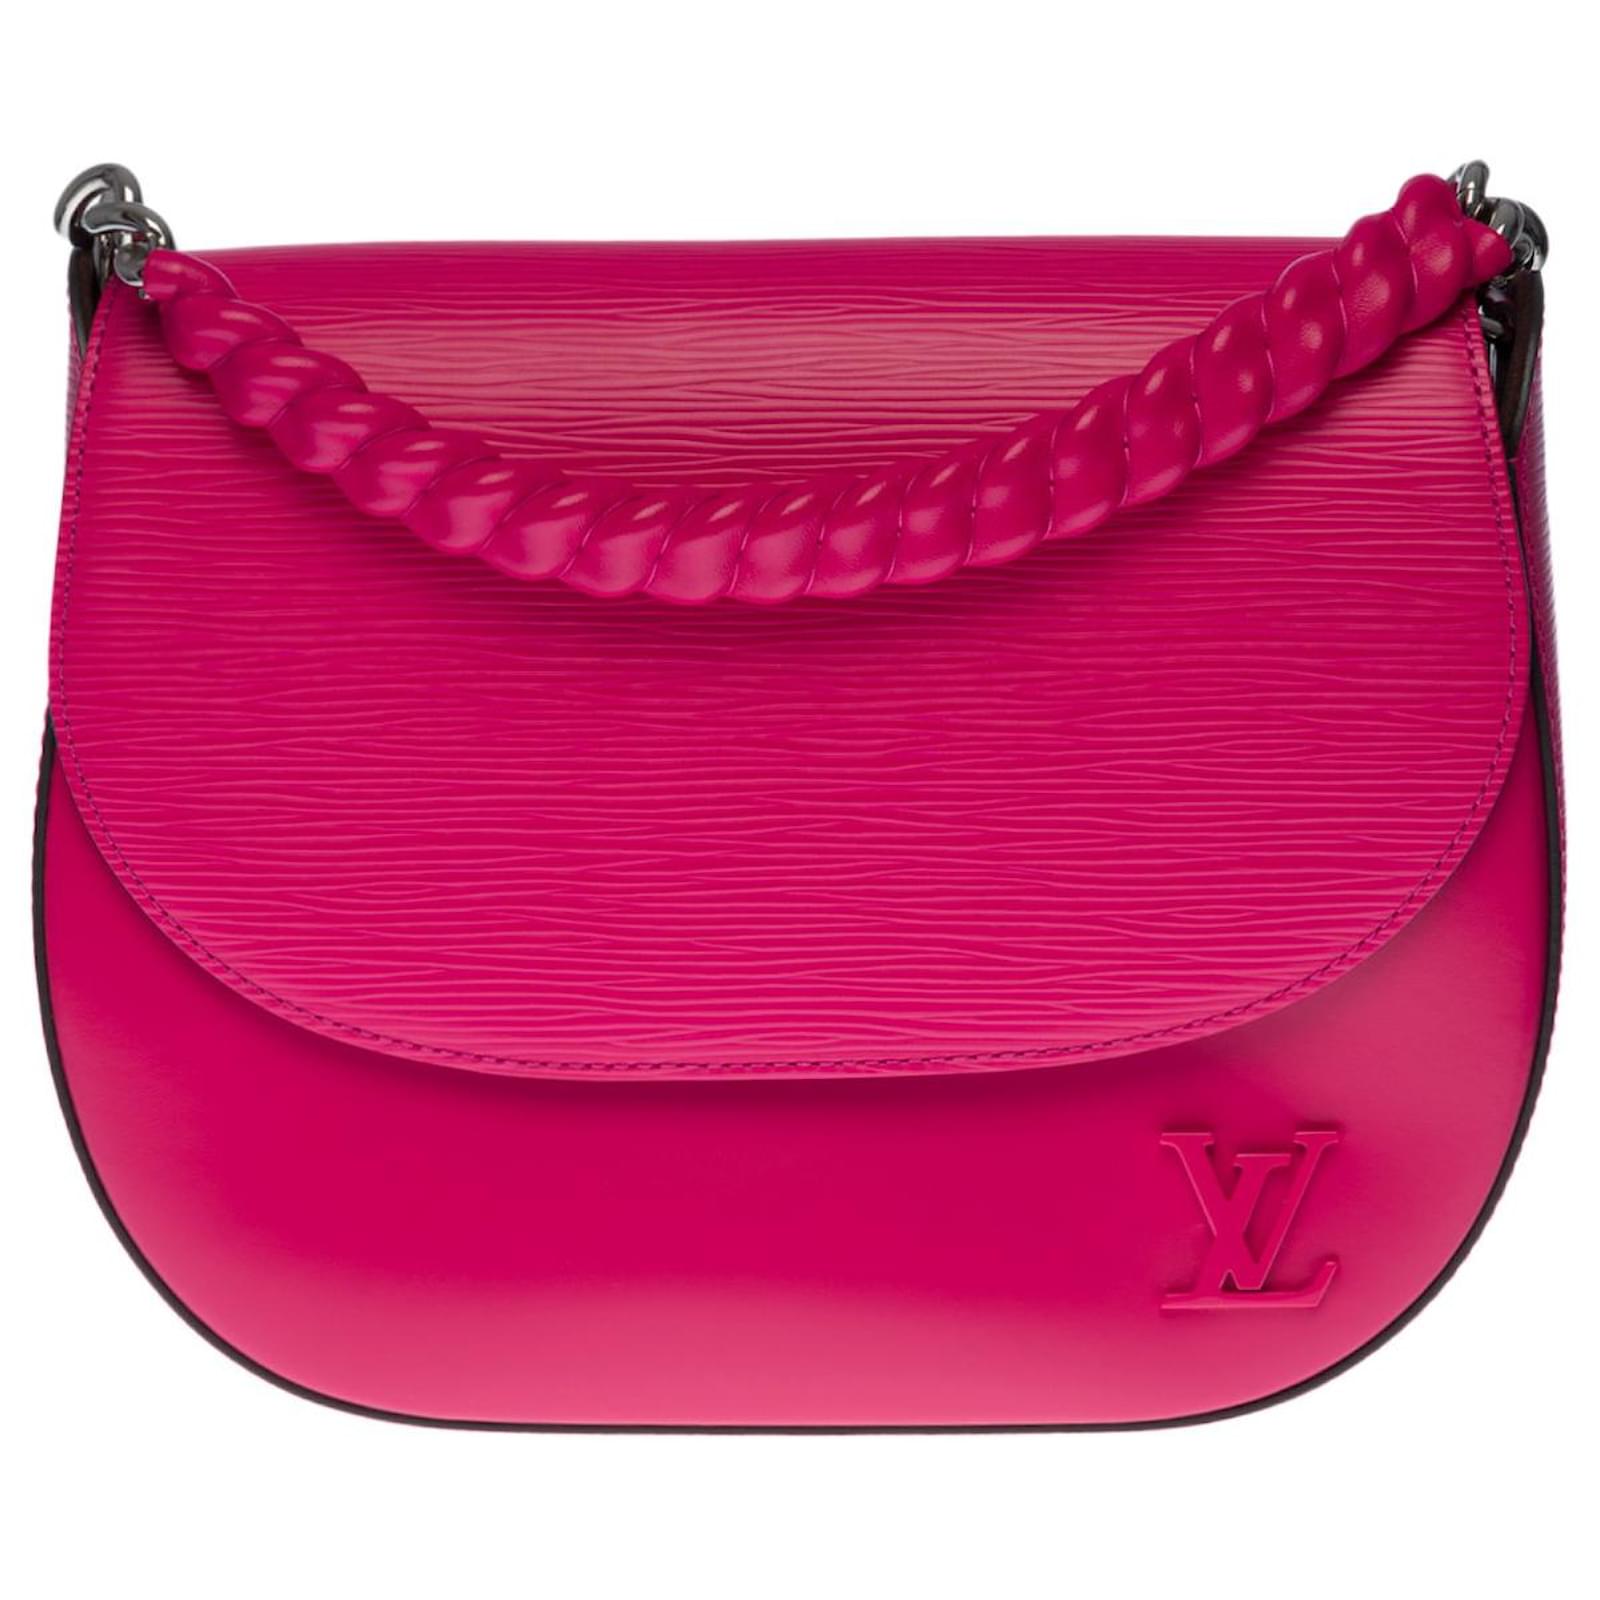 Louis Vuitton - Epi Leather Pink Handbag